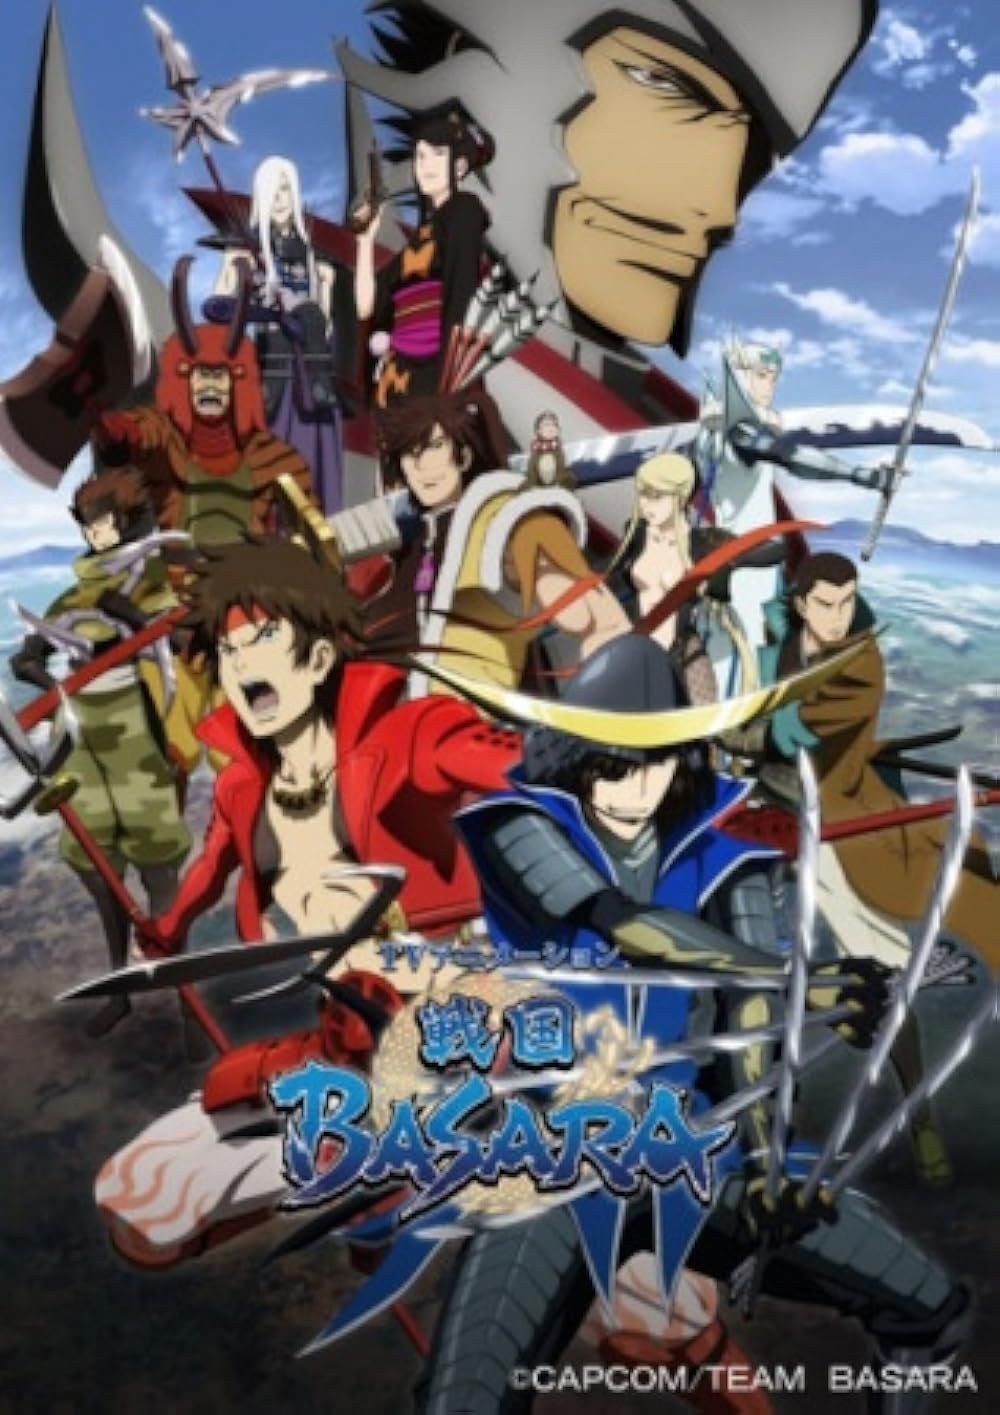 Sengoku Basara: Samurai Kings anime poster featuring the main characters ready to fight